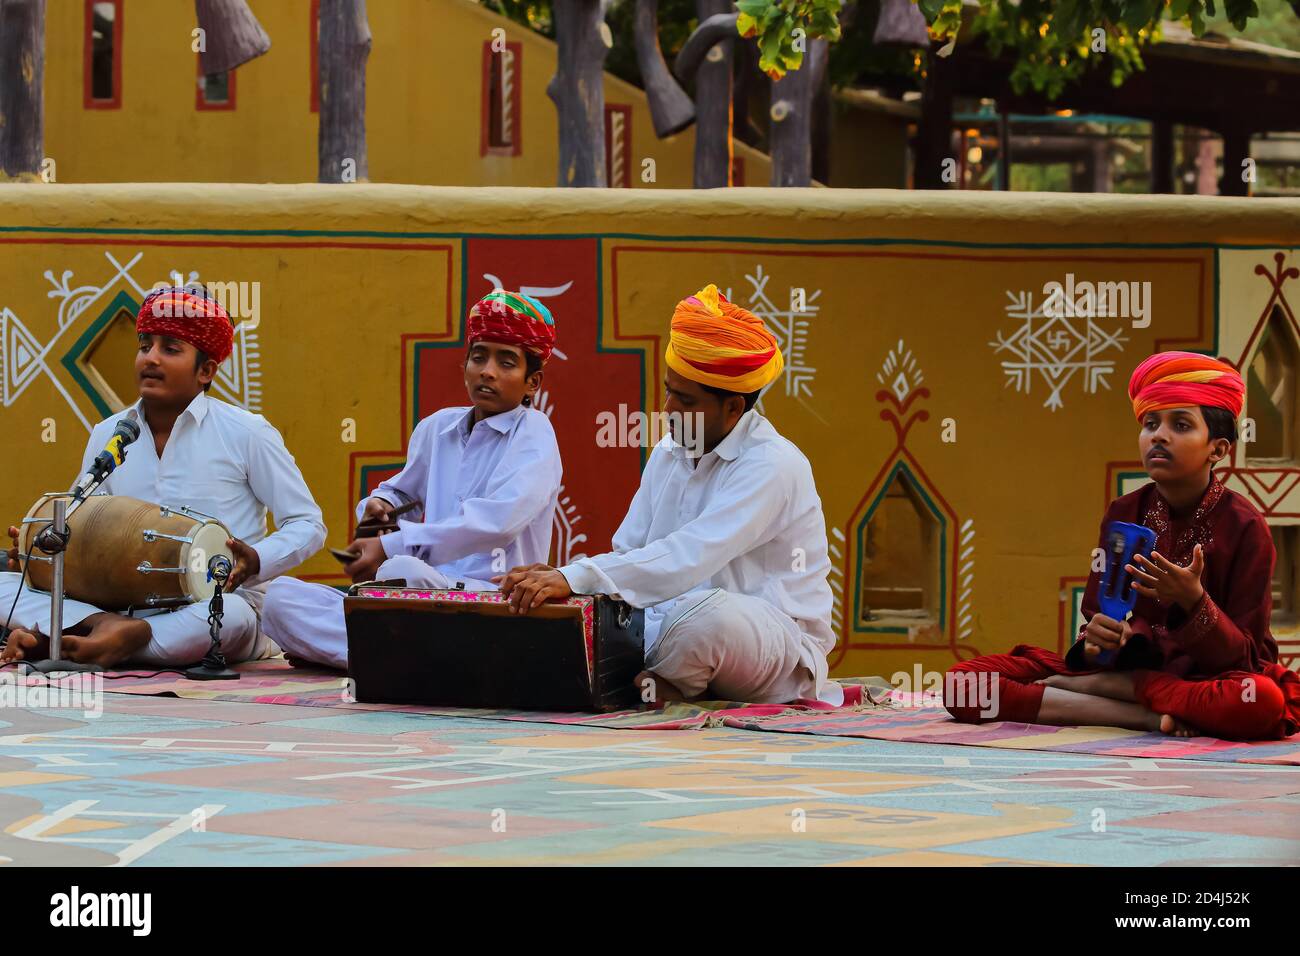 Rajasthani men dressed in traditional attire playing folk music at Jaipur Rajasthan, India on 01 November 2017 Stock Photo